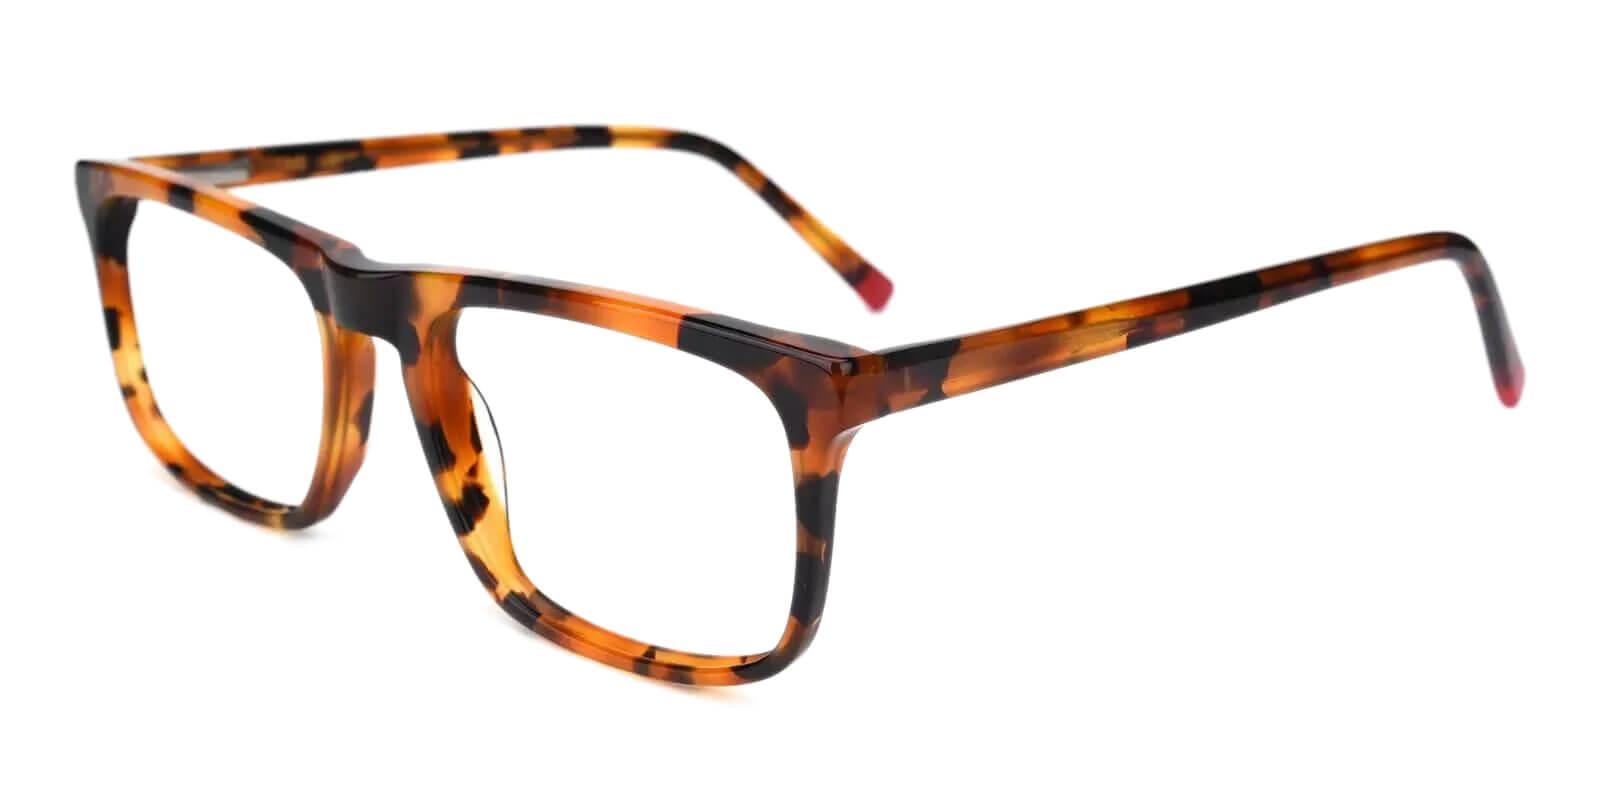 McIntosh Tortoise Acetate Eyeglasses , Lightweight , SpringHinges , UniversalBridgeFit Frames from ABBE Glasses